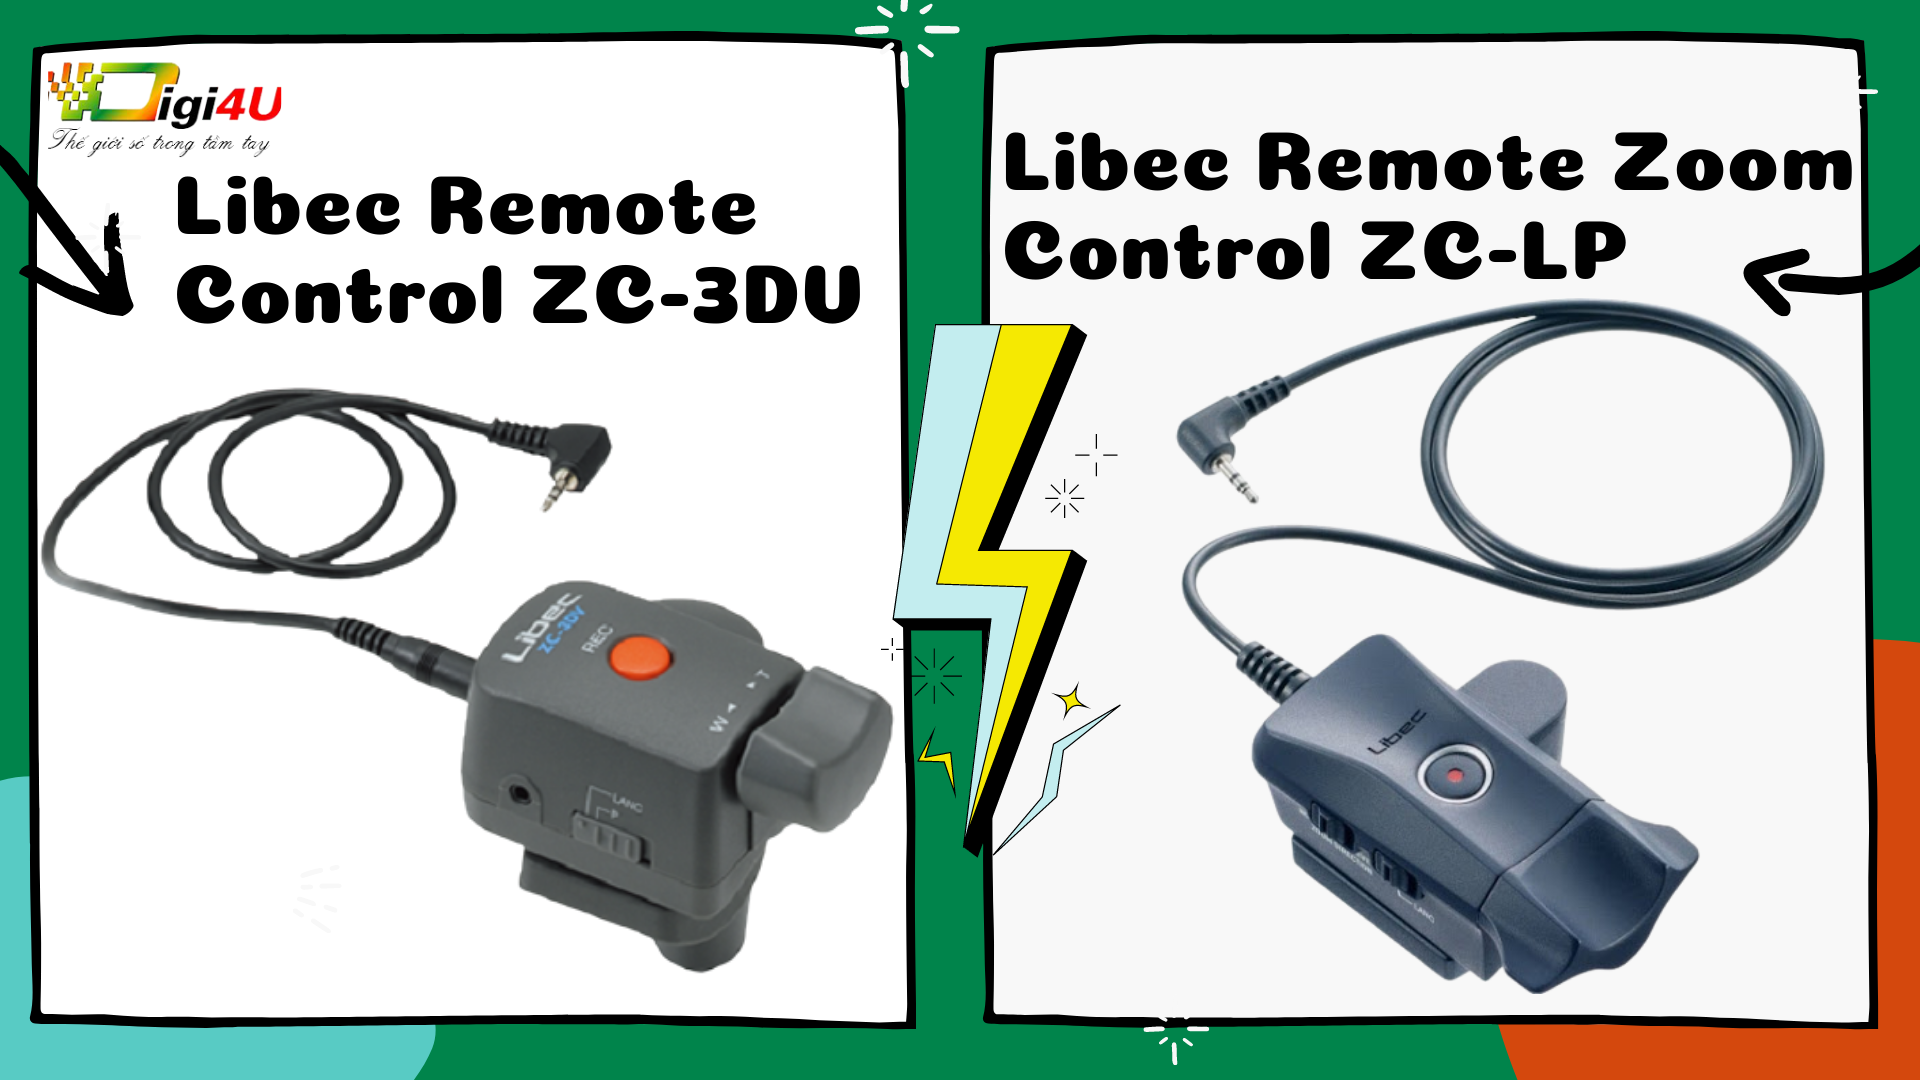 So sánh 2 dòng Libec Remote Zoom Control ZC-LP và Libec Remote Control ZC-3DV